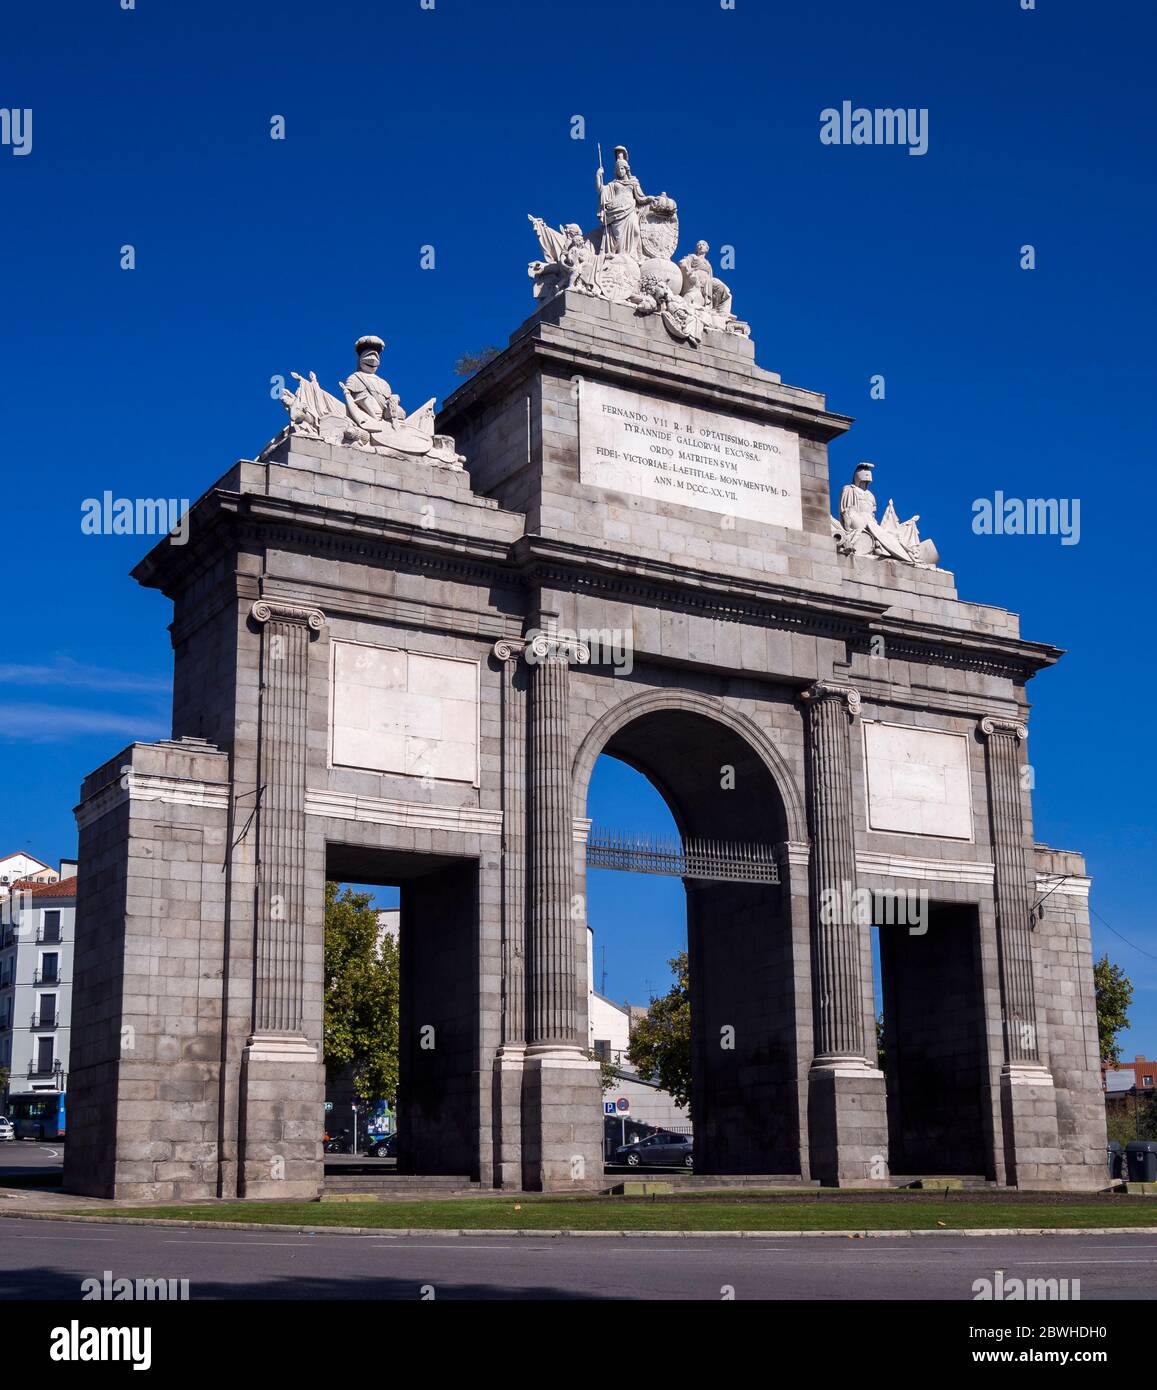 Puerta de Toledo. Madrid. España Stock Photo - Alamy